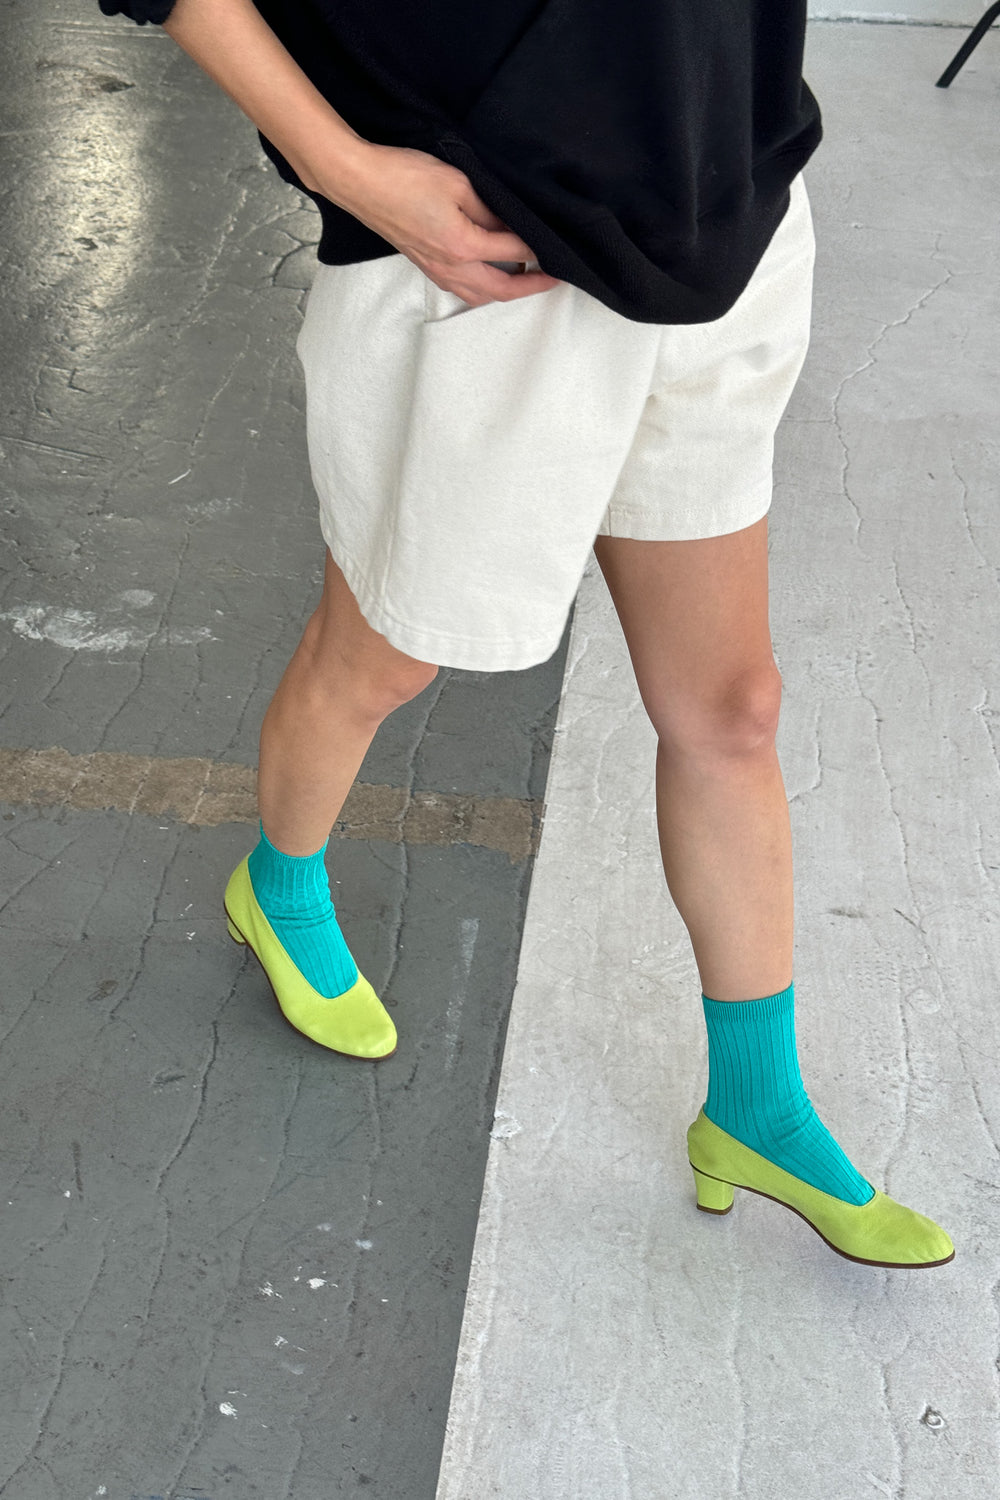 Her socks - Turquoise